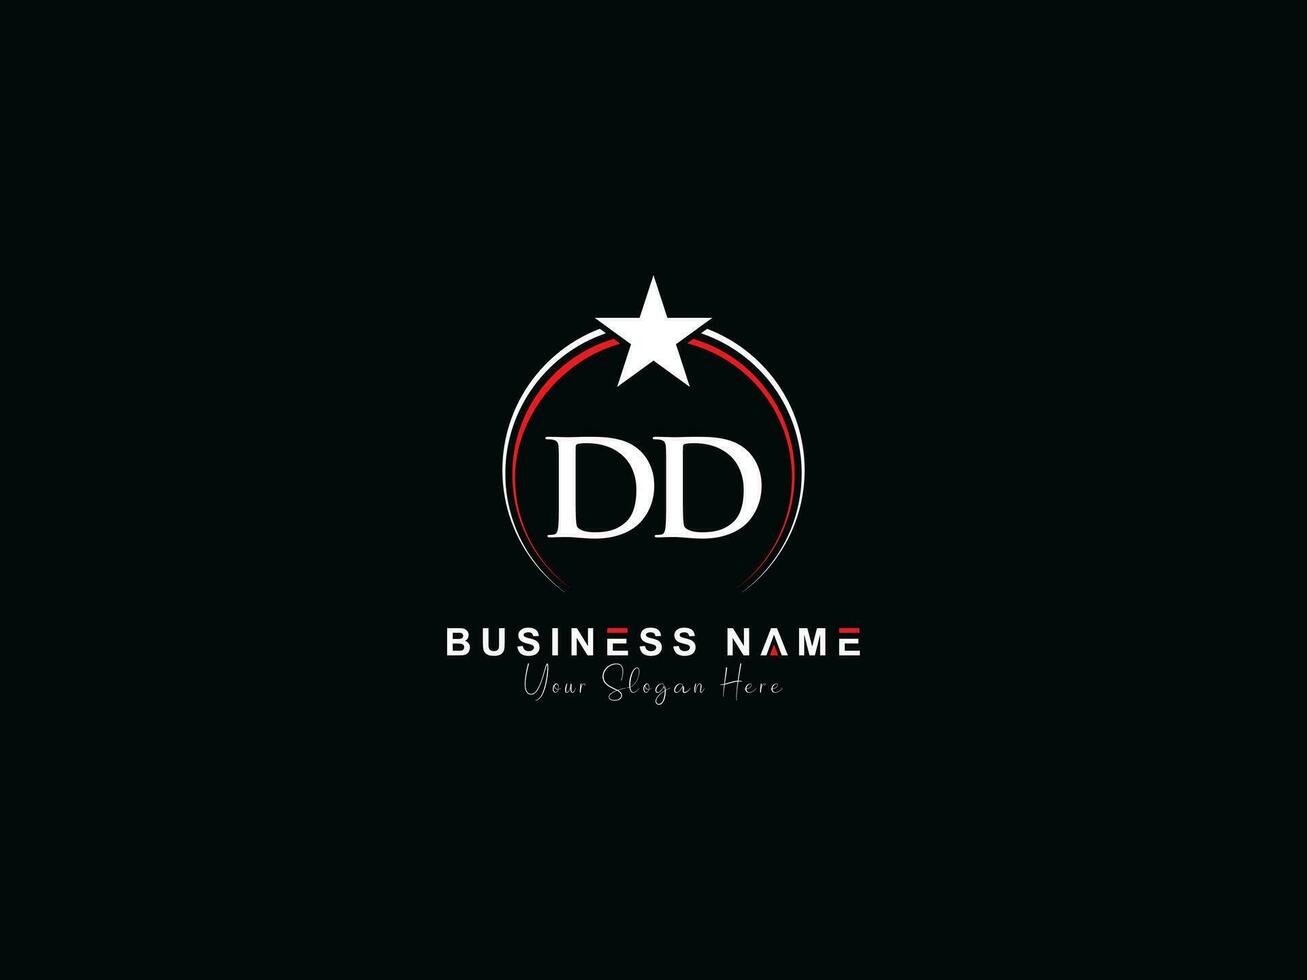 Initial Circle Dd Logo Icon, Creative Luxury Star DD Letter Logo Image Design vector